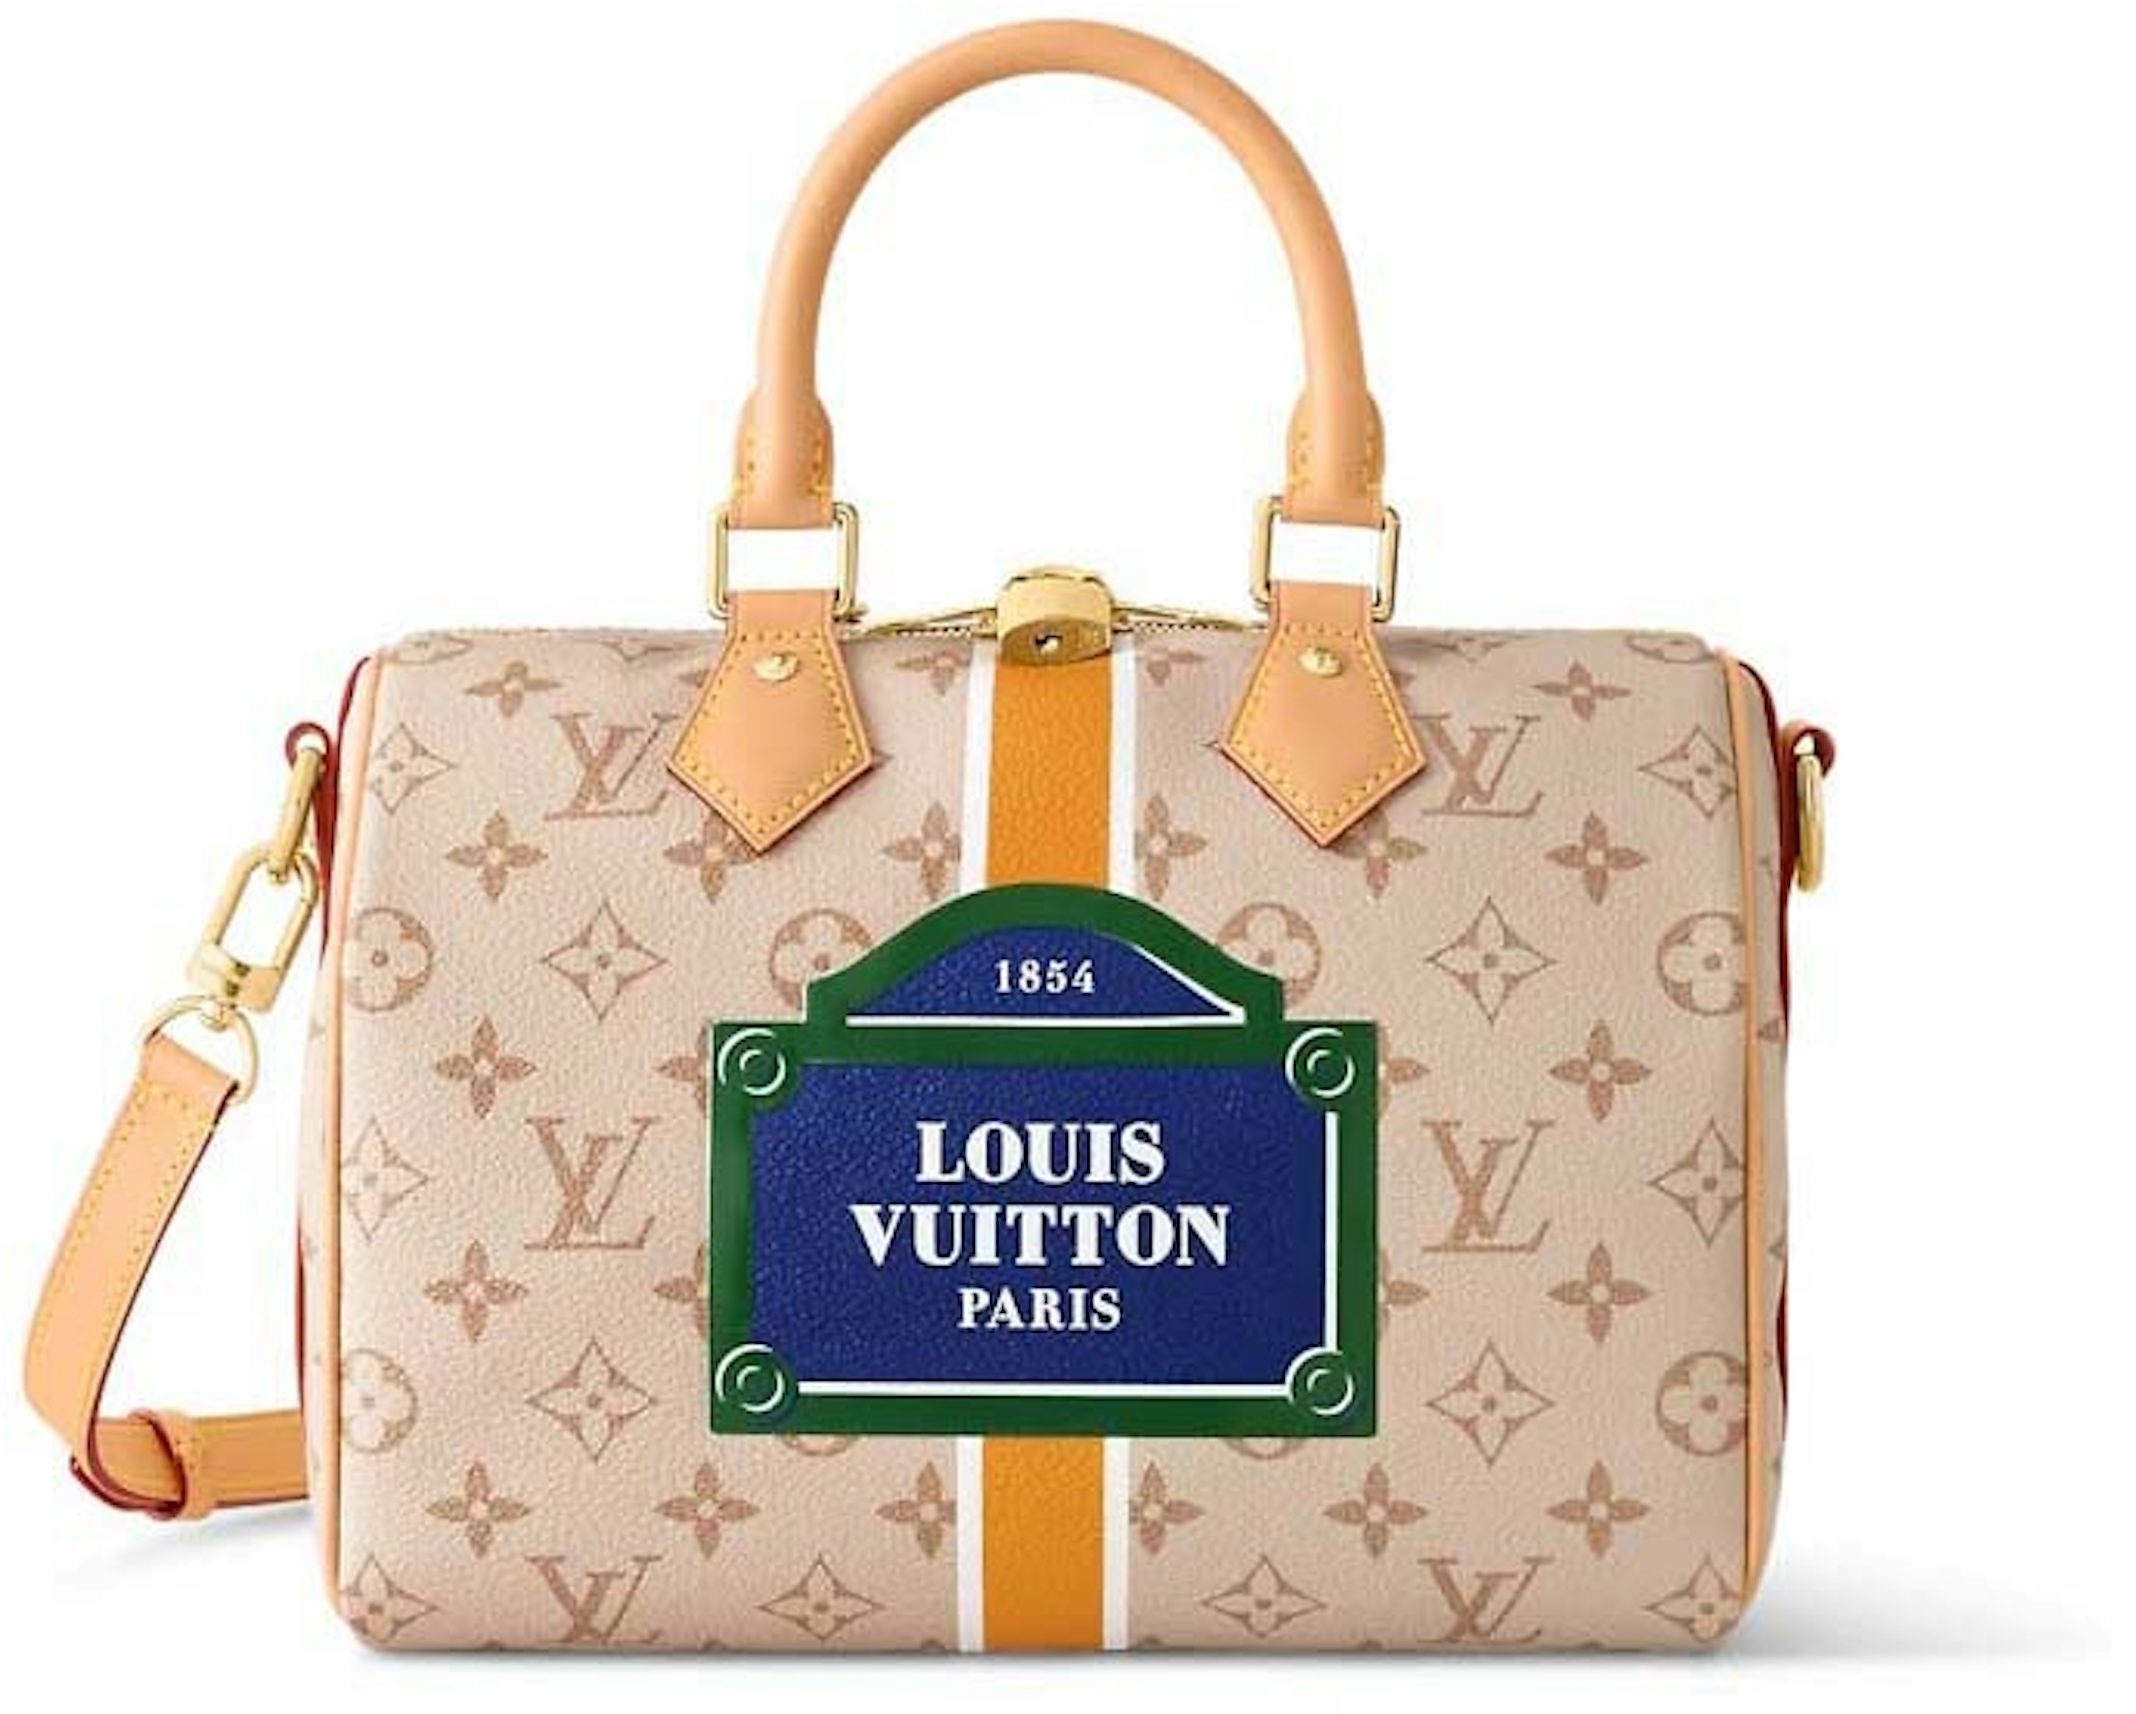 Louis Vuitton Speedy B 25 VS Marc Jacobs the mini tote bag! 